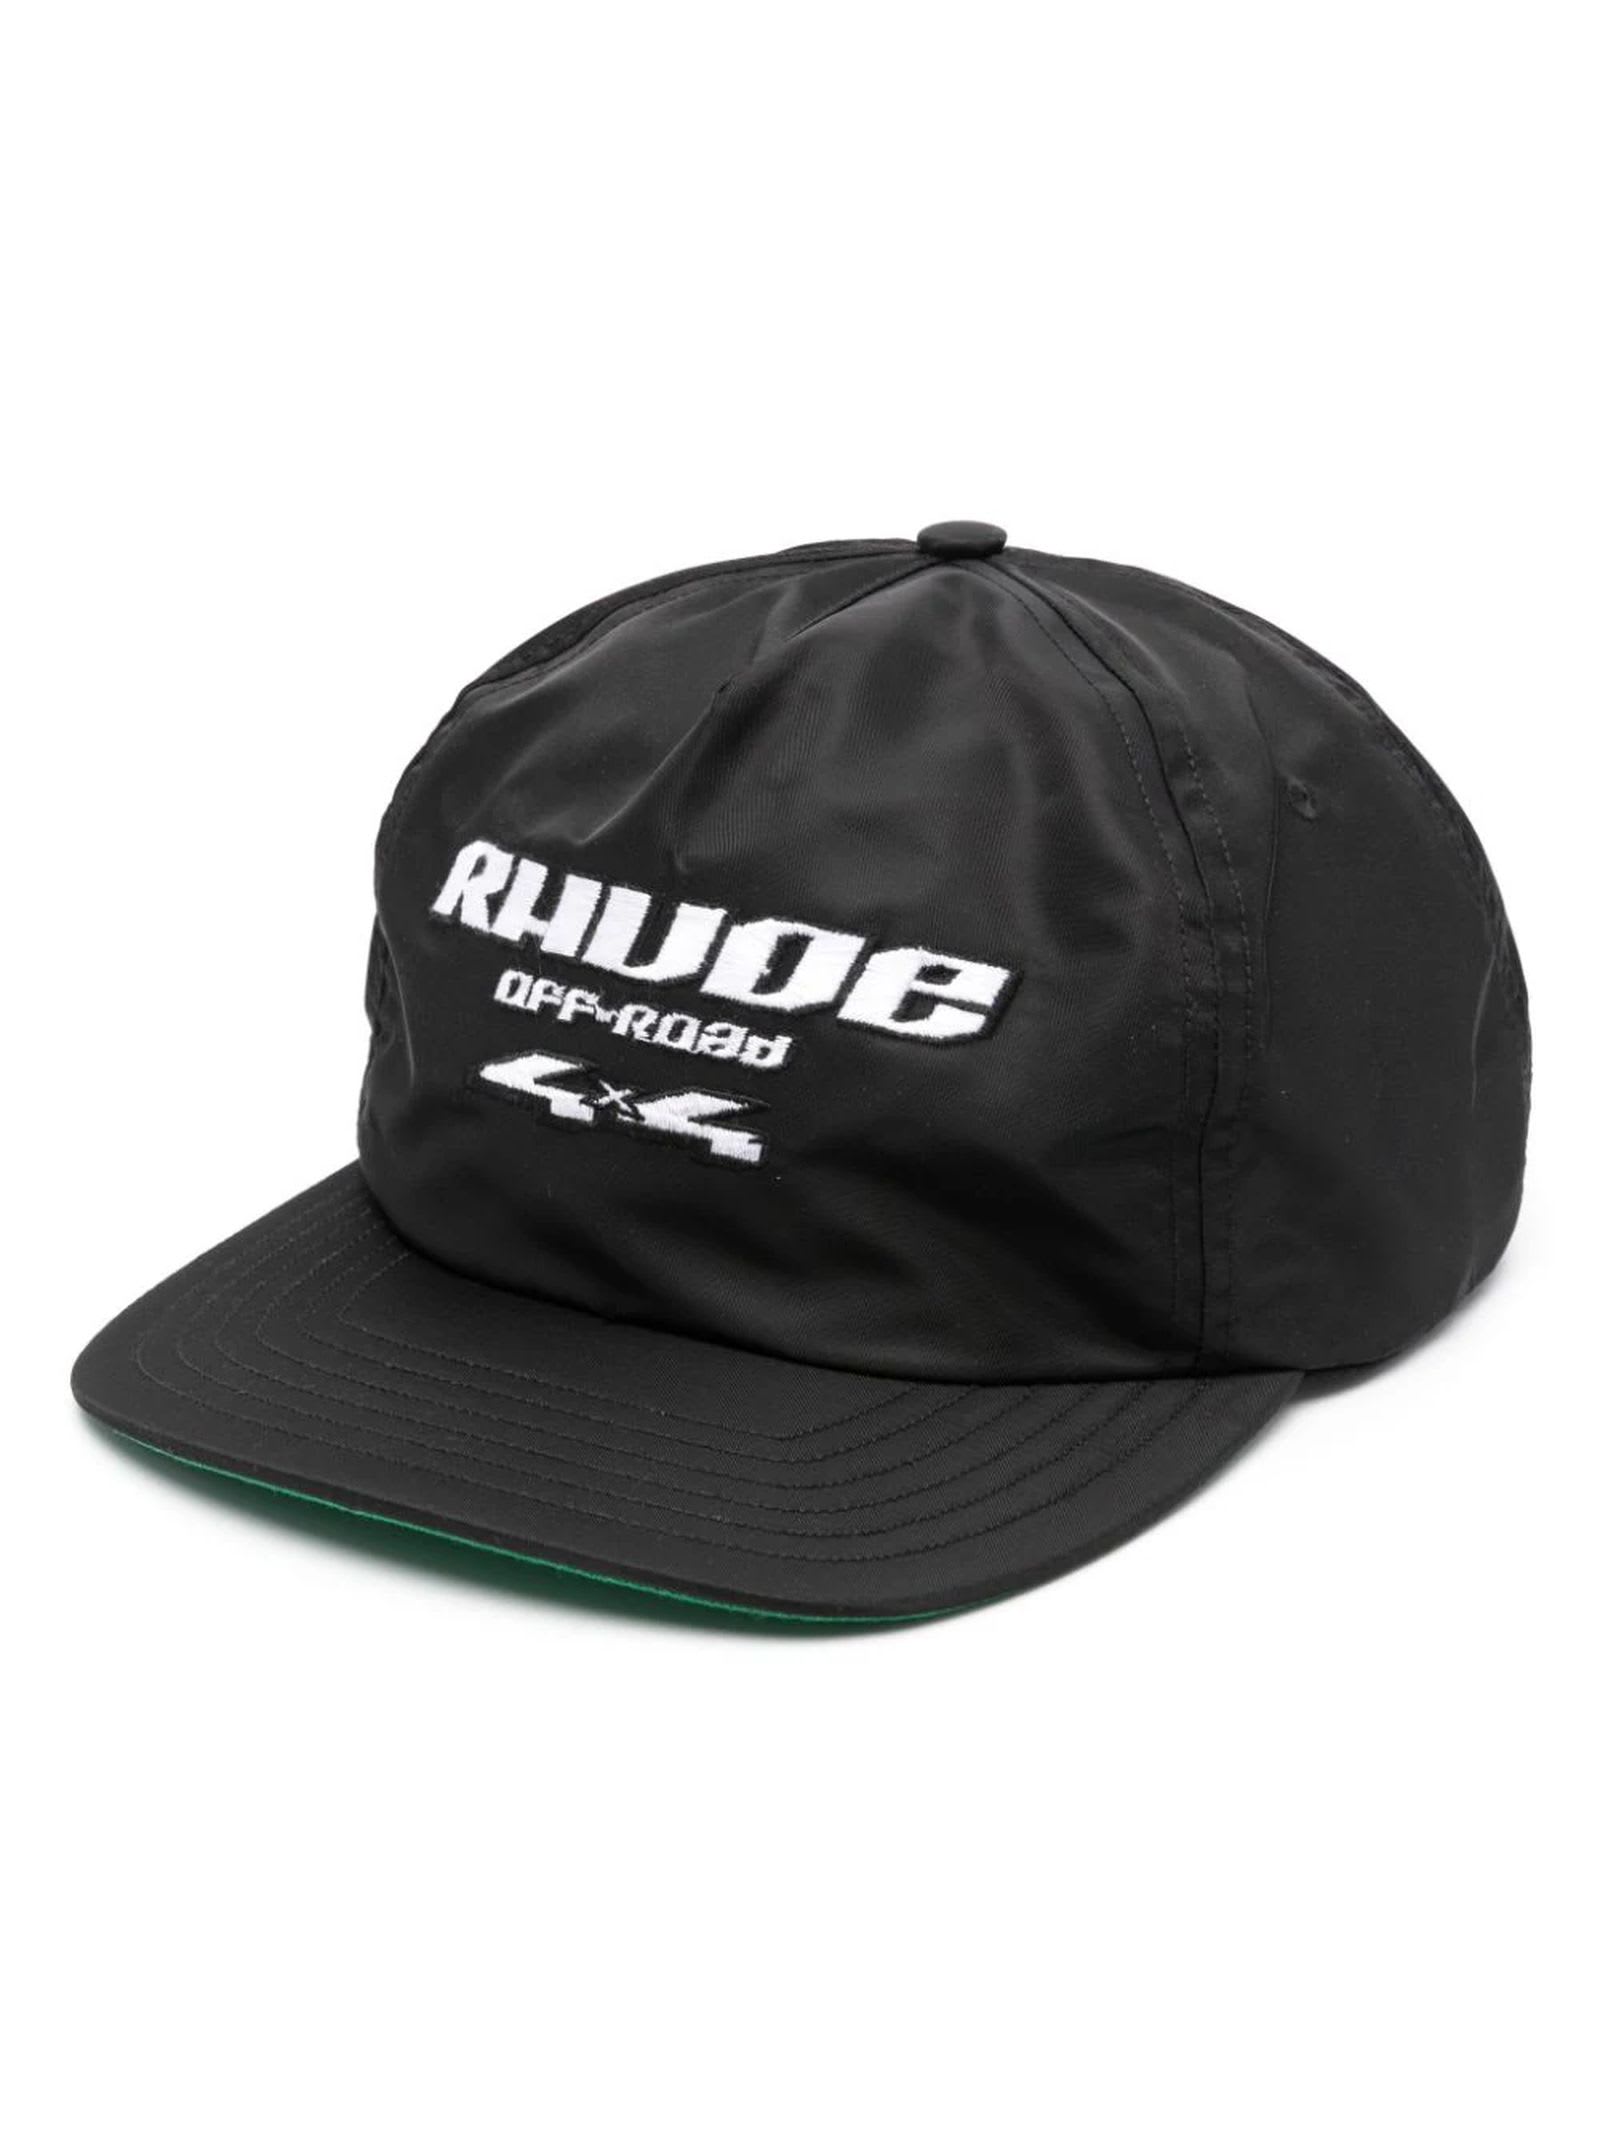 RHUDE BLACK OFF-ROAD 4X4 HAT